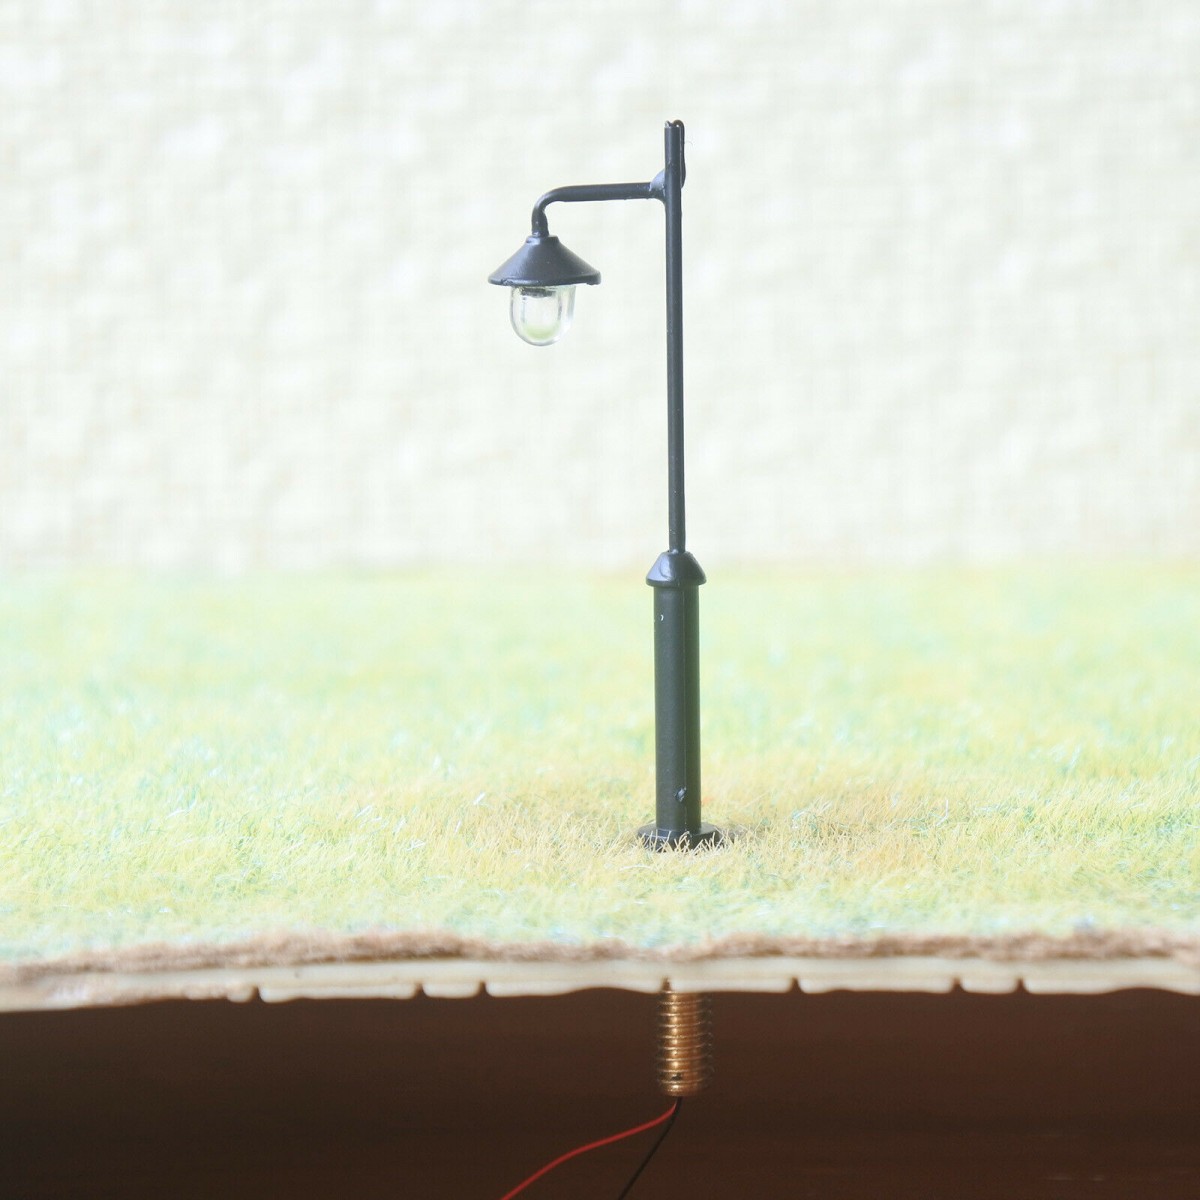 2 x N scale LED antique street light model railroad path lamp post #SL3N